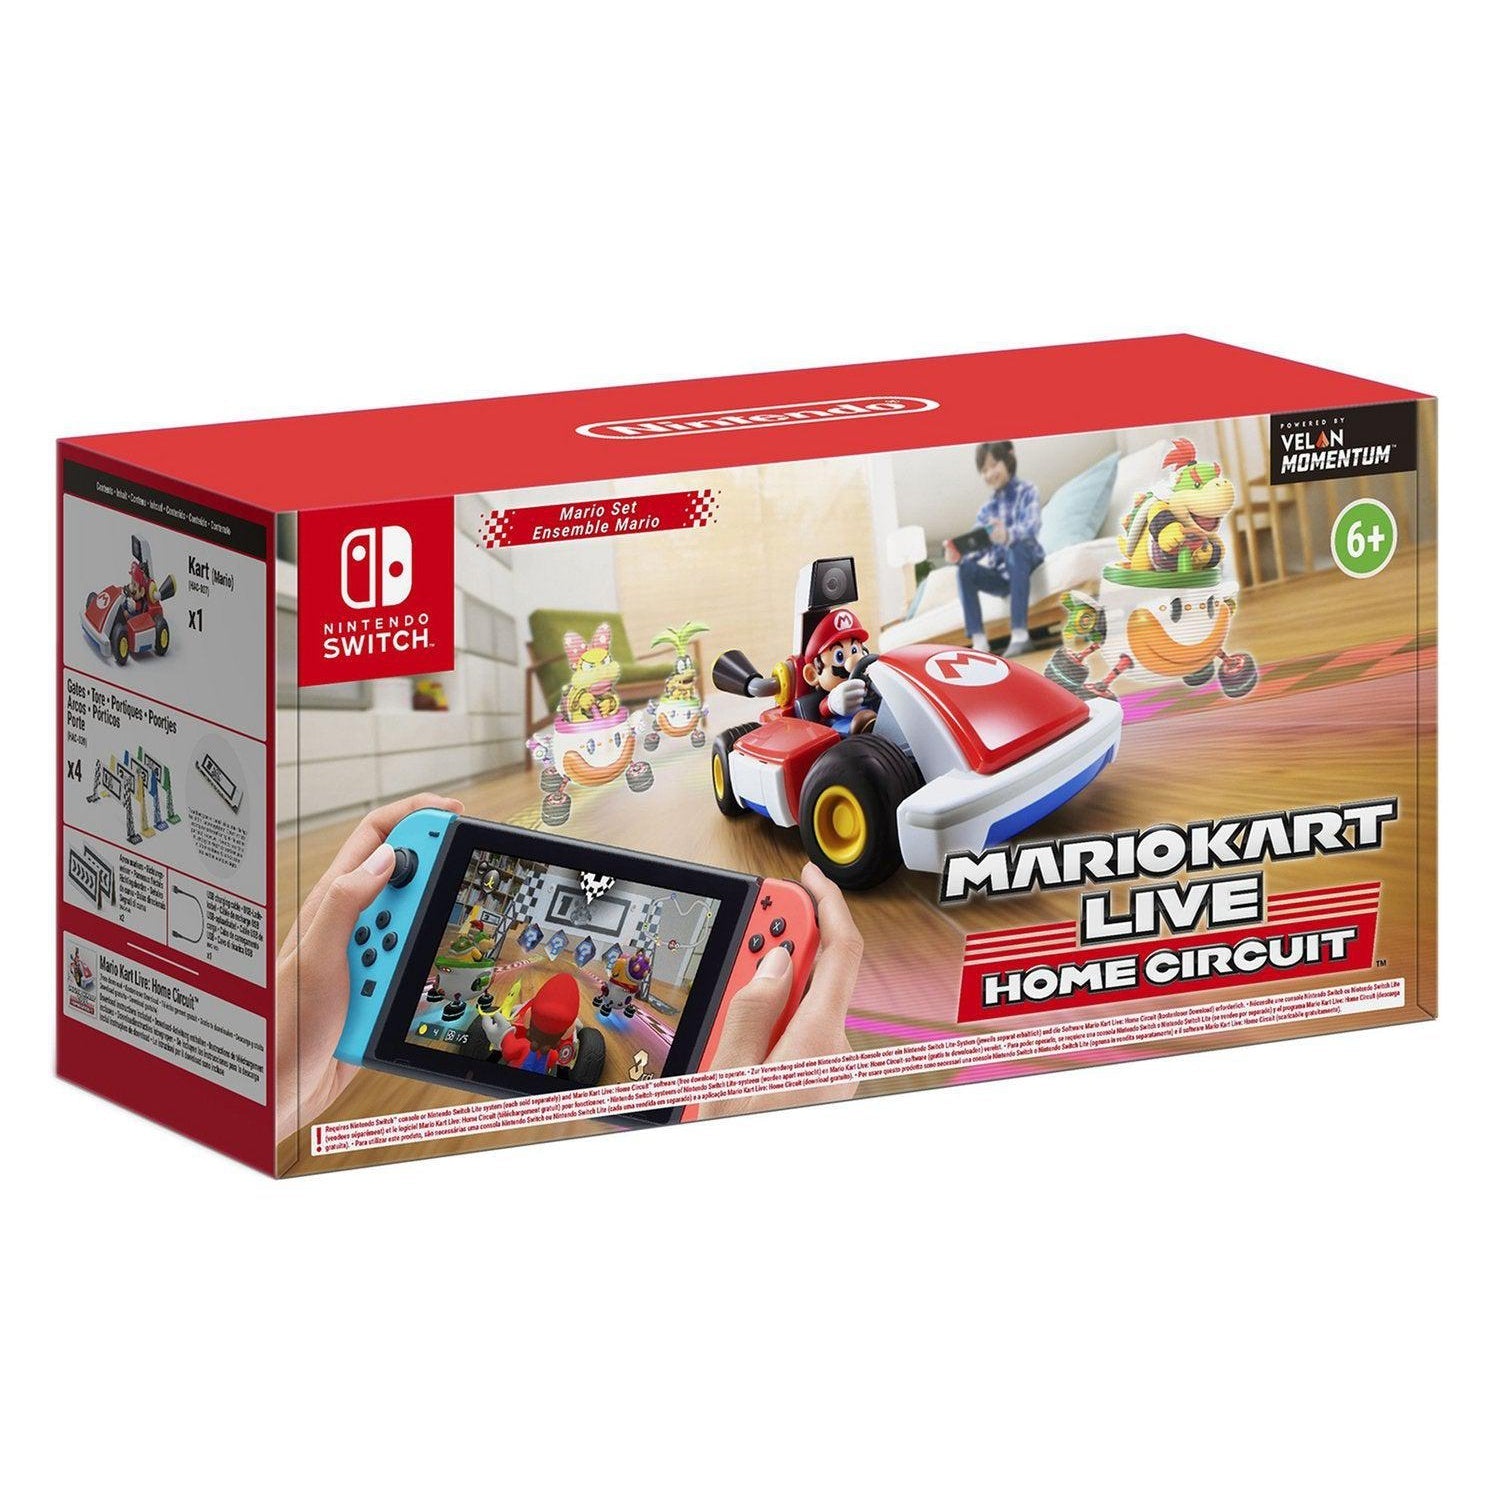 Mario Kart Live Home Circuit Nintendo Switch Game - Refurbished Good